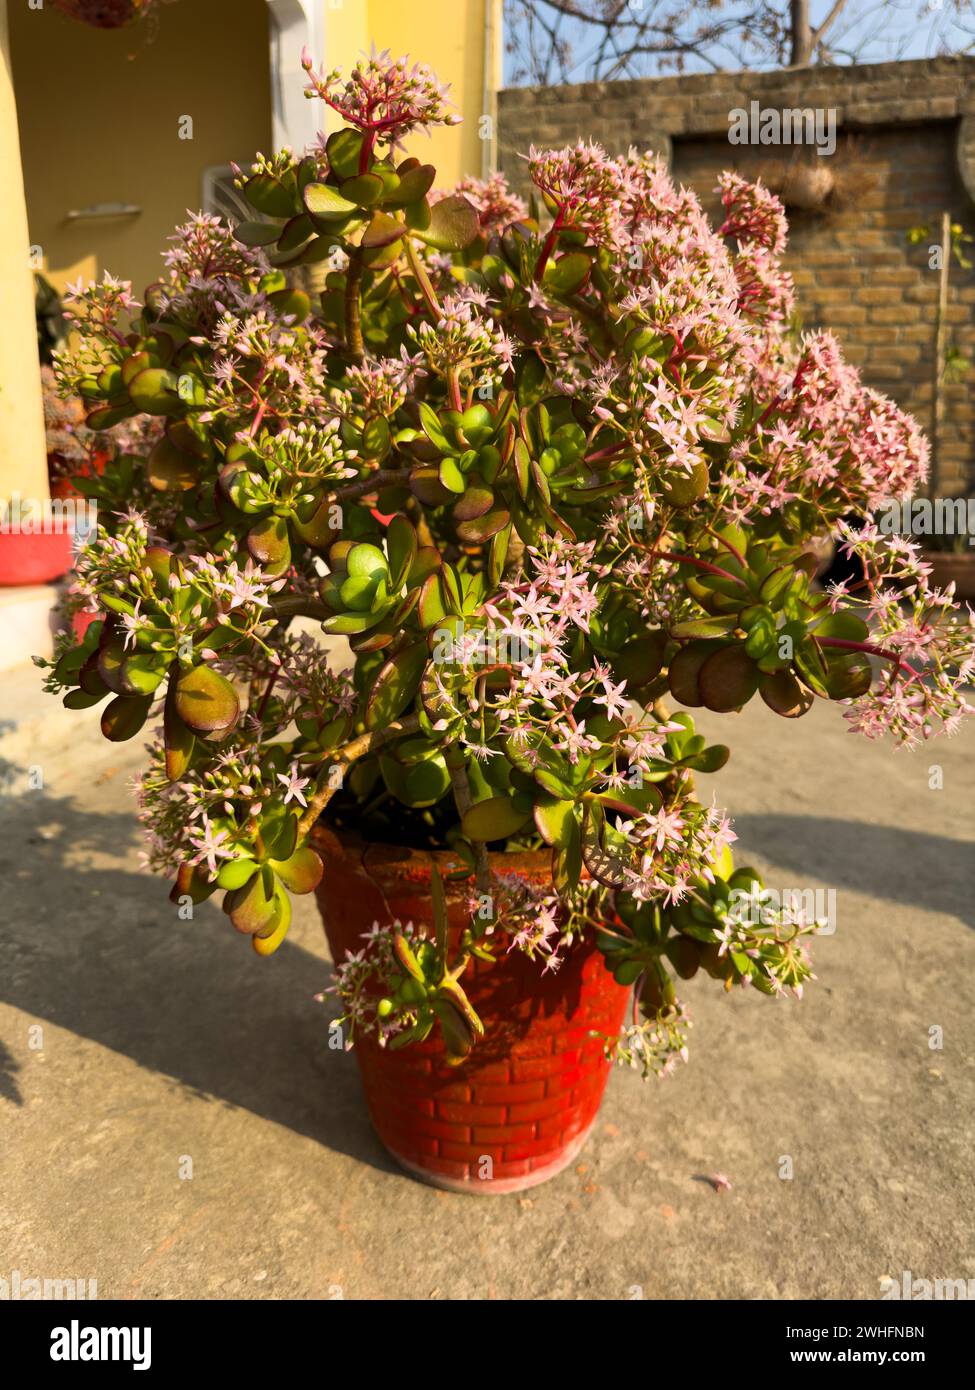 Crassula ovata lucky plant full of flowers Stock Photo